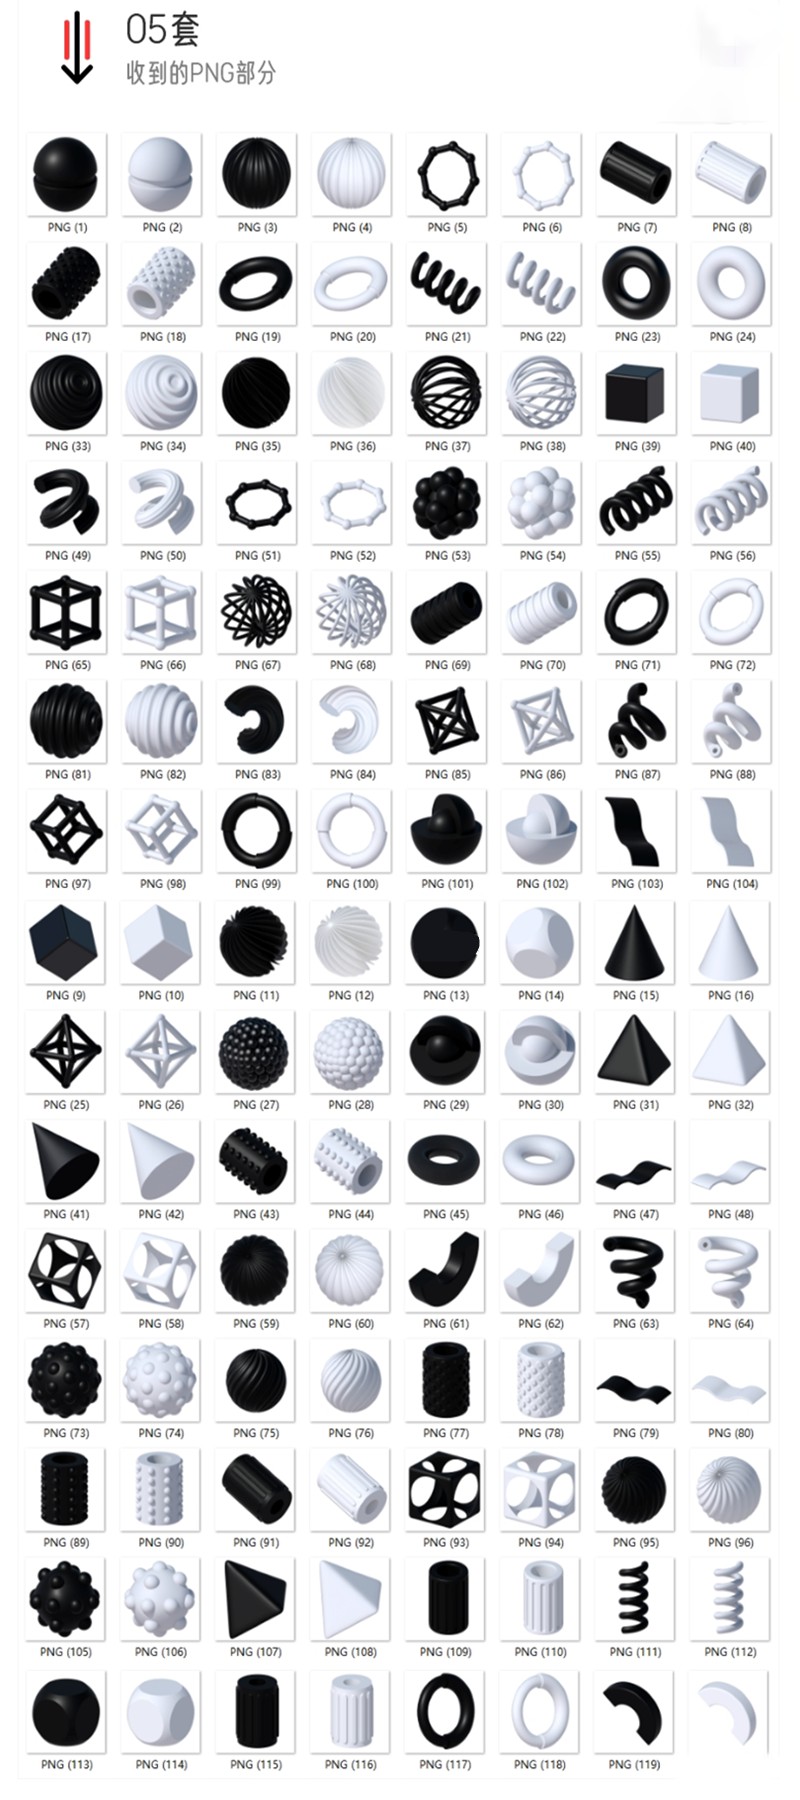 PNG素材-最新抽象几何3D立体图标PSD+PNG格式素材合集 图片素材 第24张